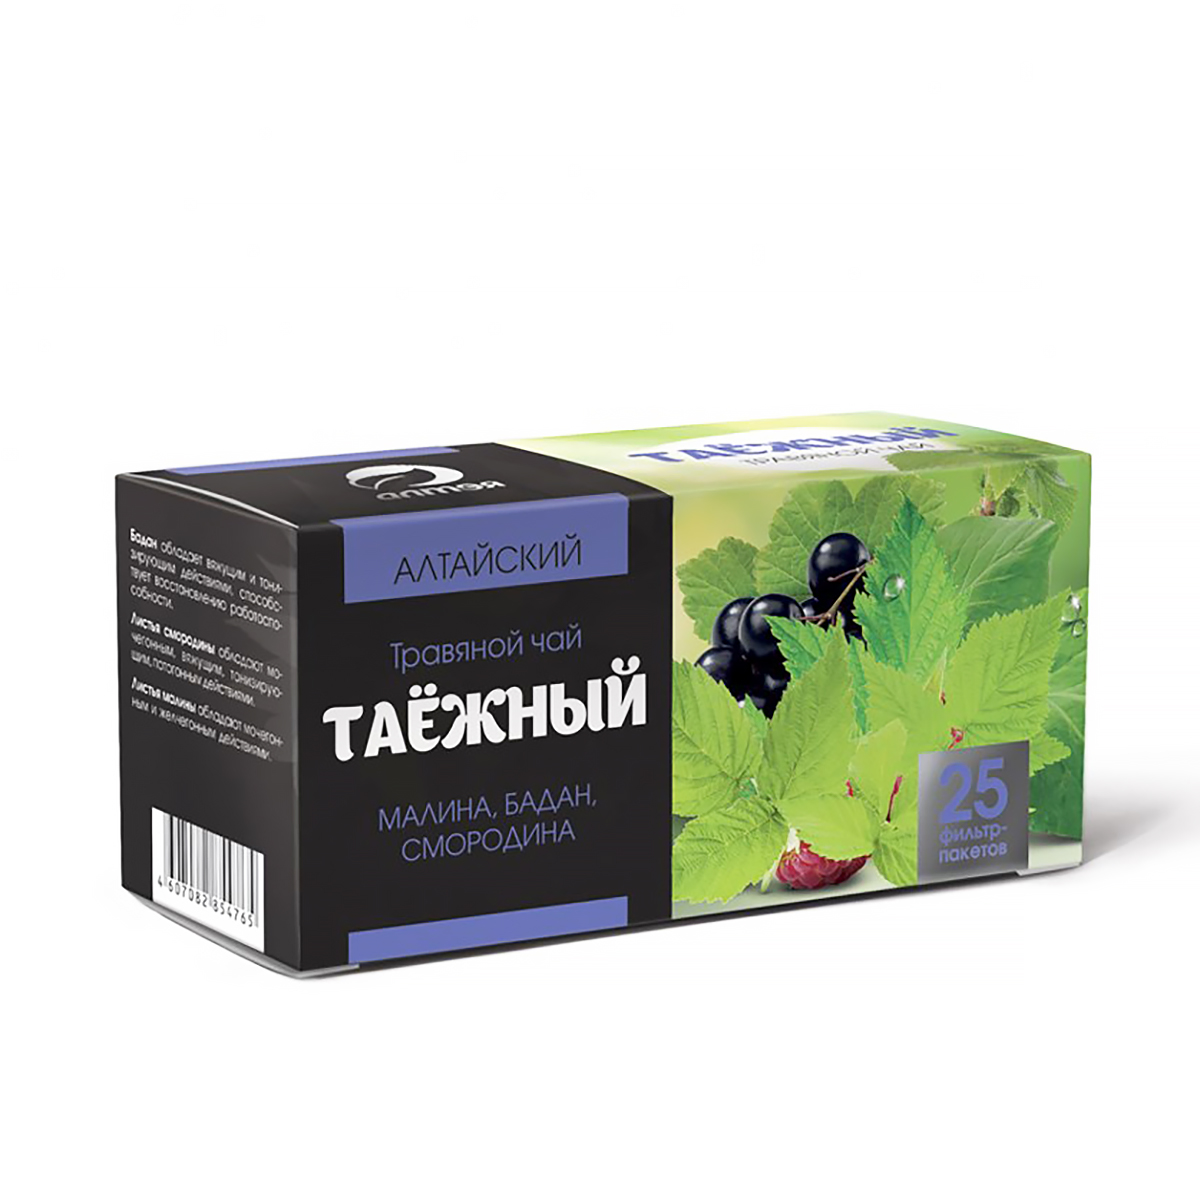 Чай травяной Таежный в фильтр-пакетах, 25 шт х 1.2 г